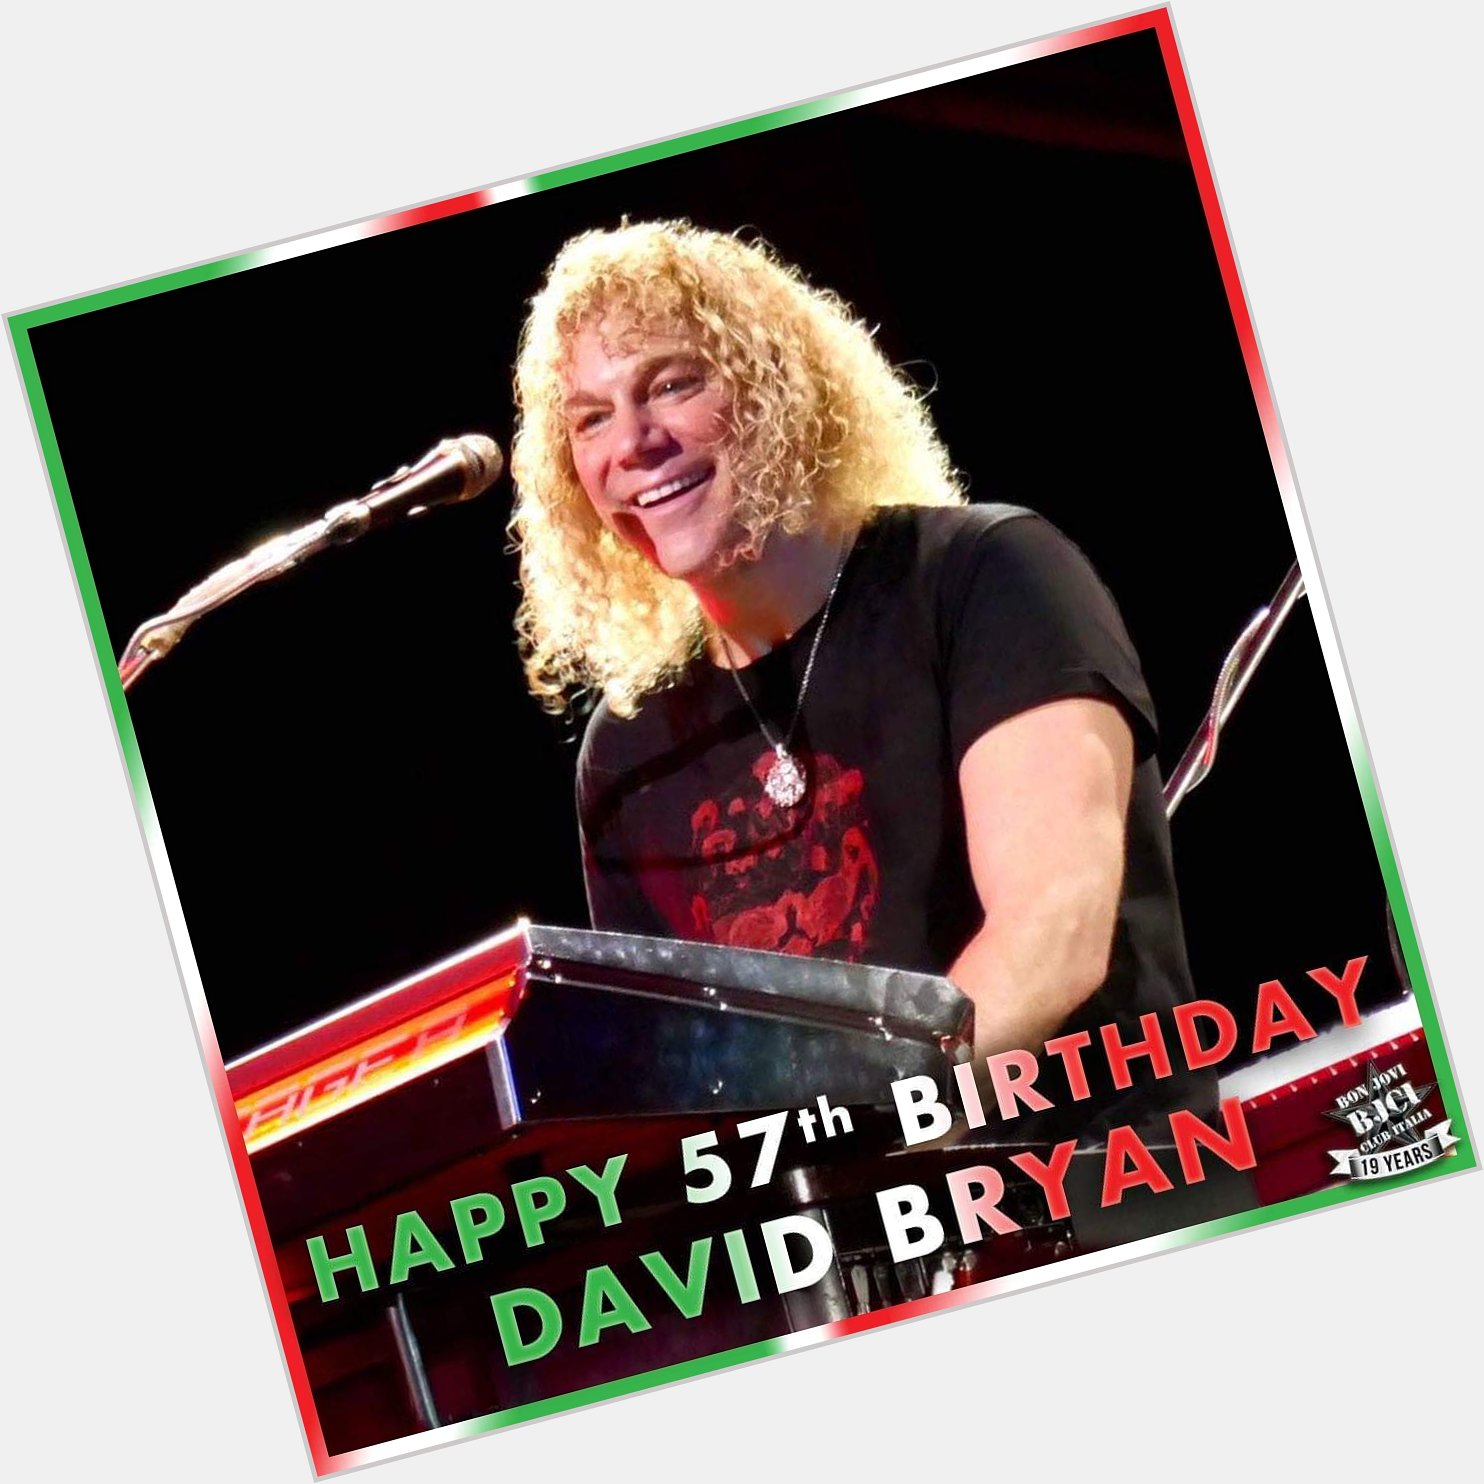   Buon compleanno David Bryan! Happy birthday!    